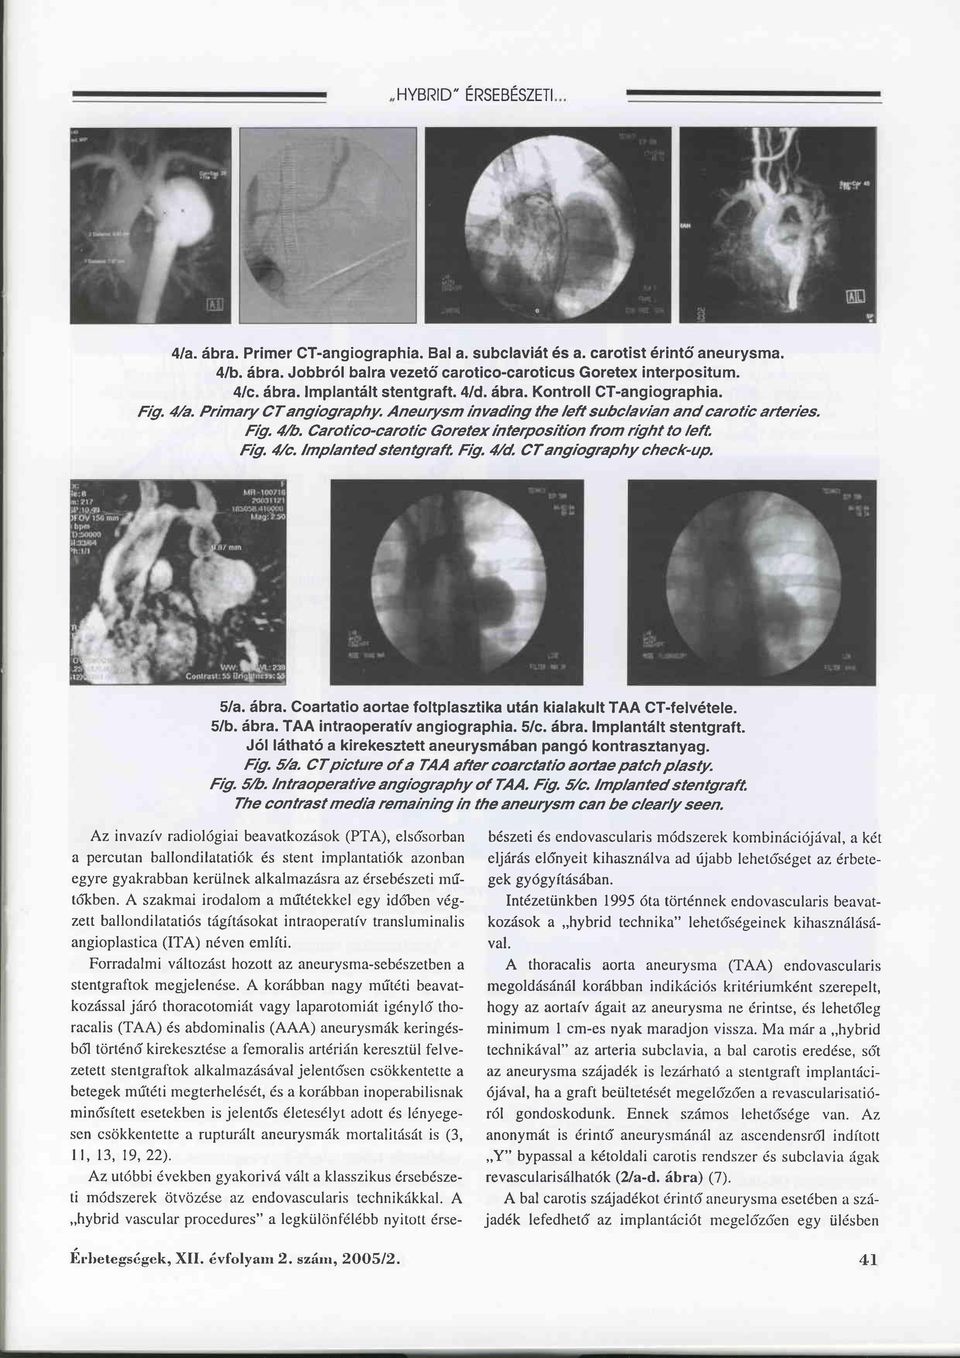 lmplanted stentgraft FU. 4/d. CTangiography check-up. Sla. äbra. Coartatio aortae foltplasztika utän kialakult TAA CT-felv6tele. 5/b. äbra. TAA intraoperativ angiographia. Slc. äbra.lmplantält stentgraft.